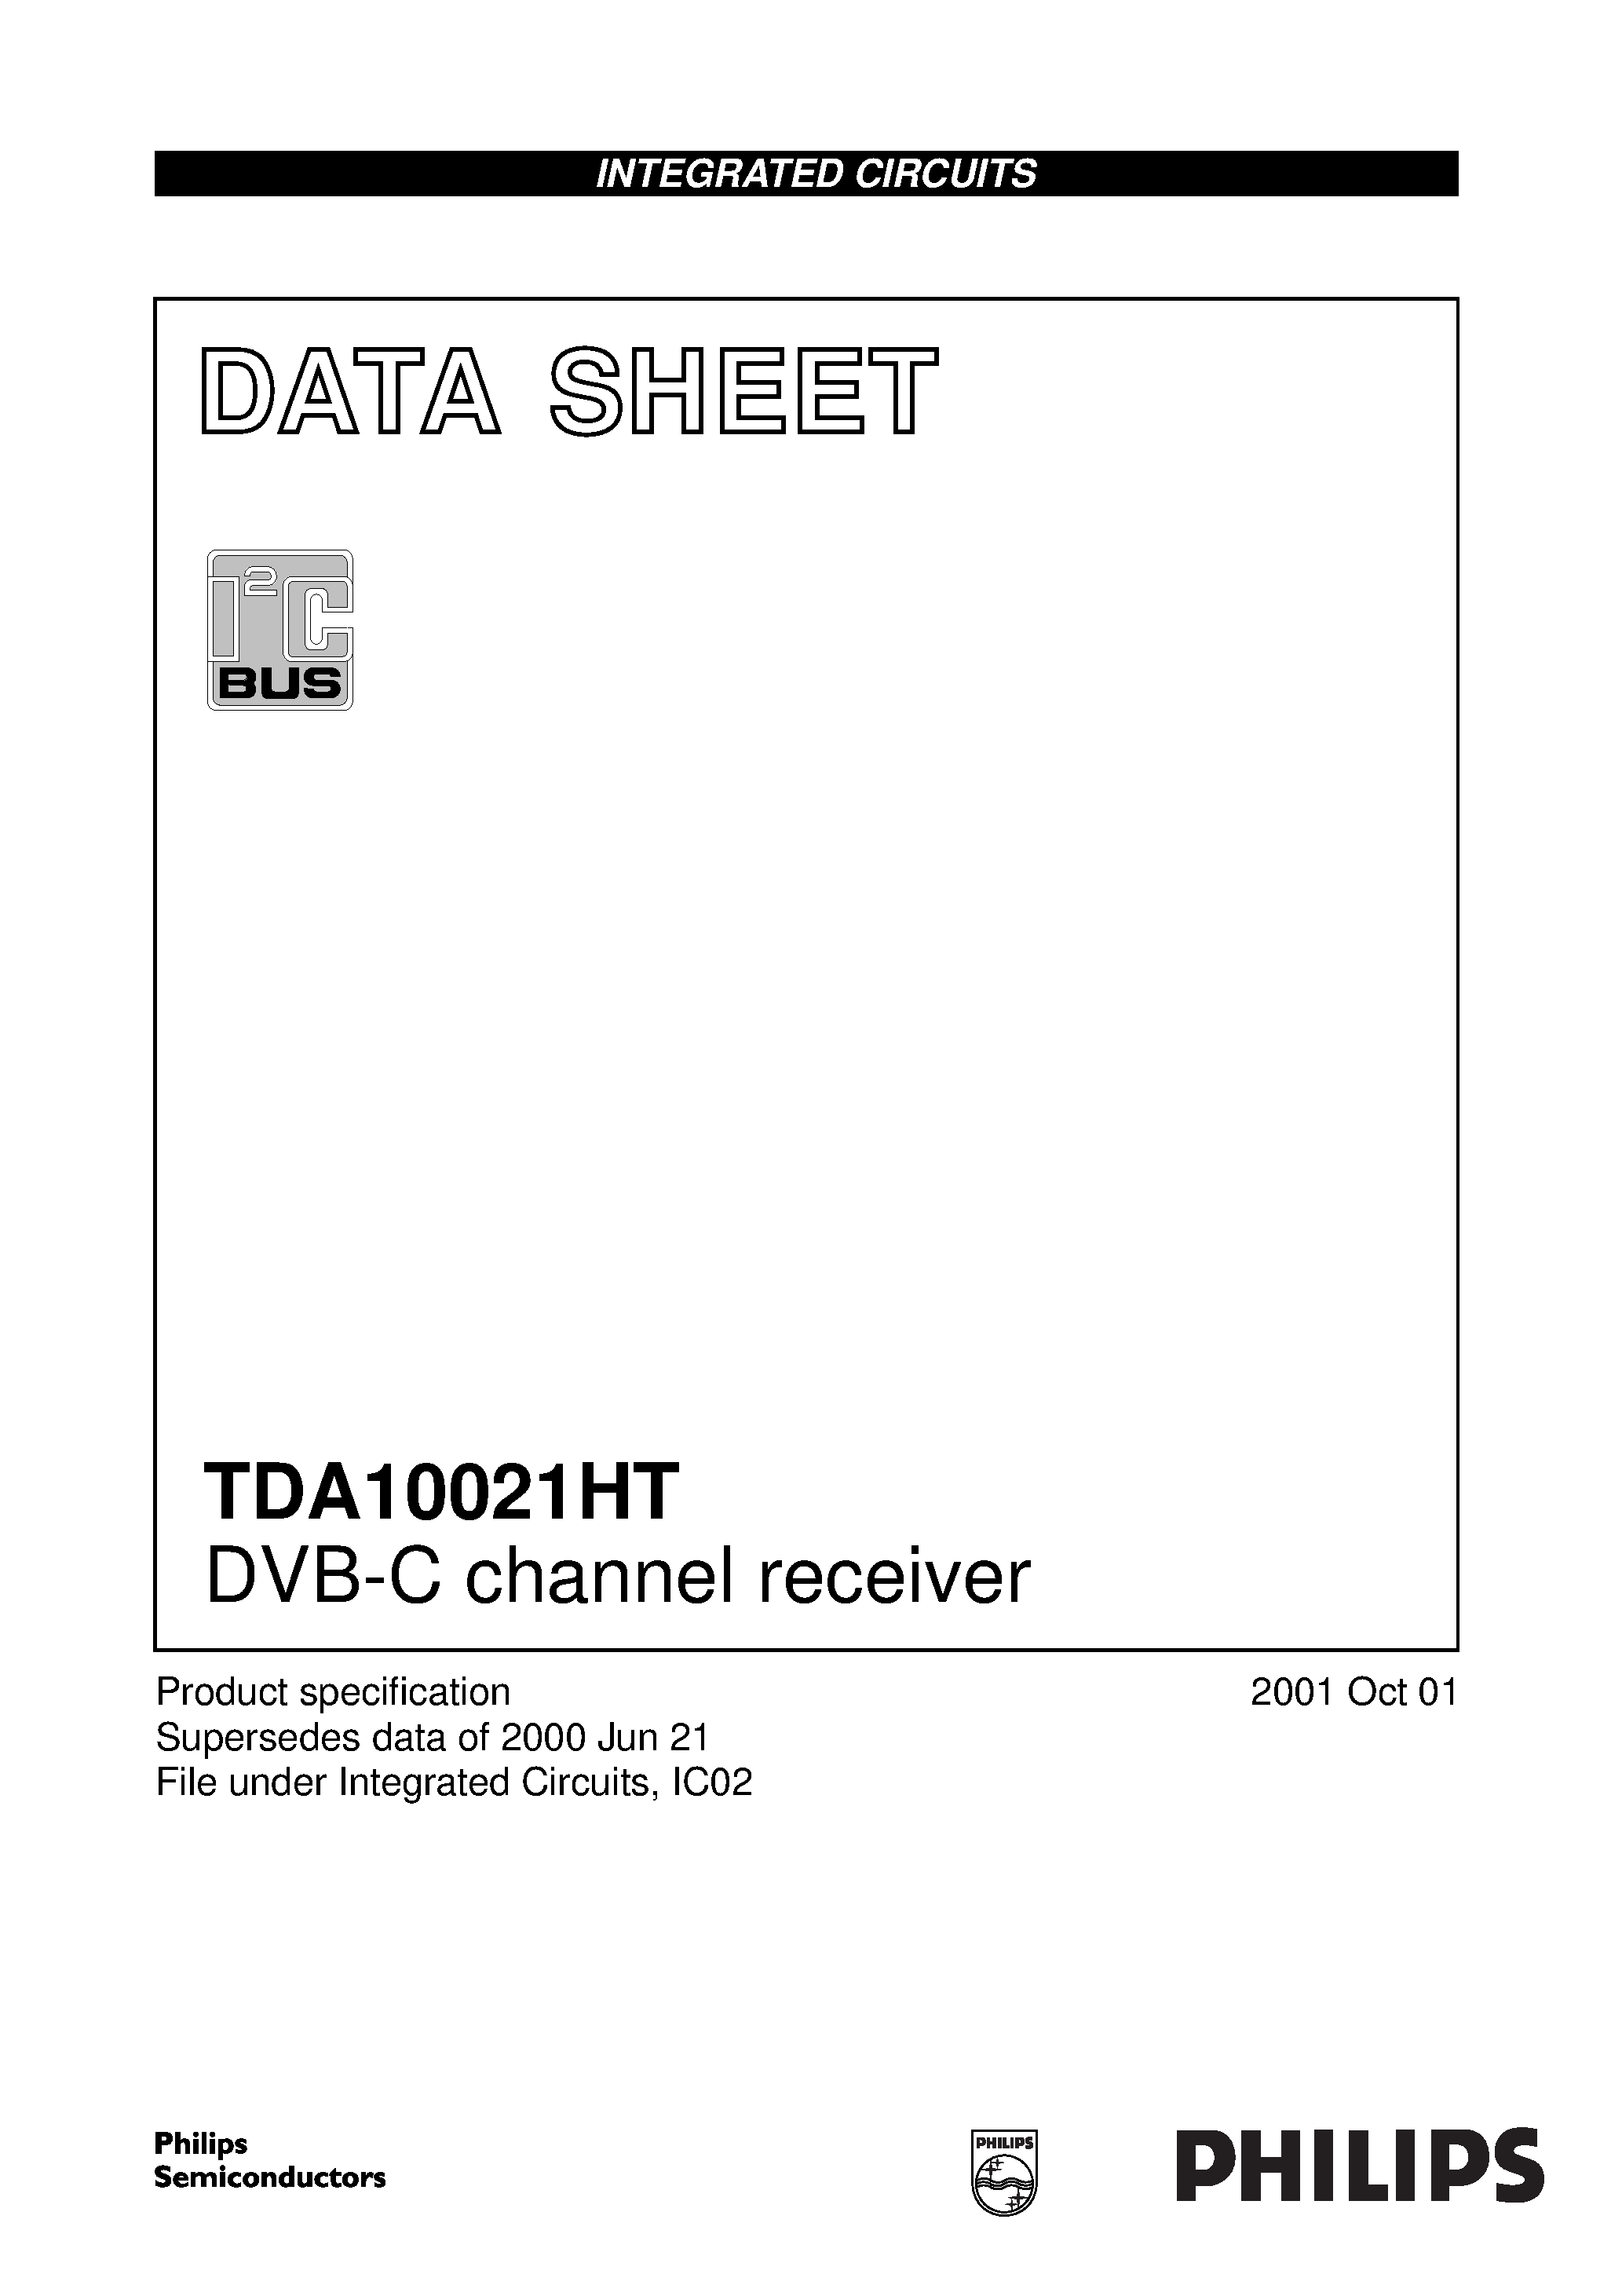 Даташит TDA10021HT - DVB-C channel receiver страница 1